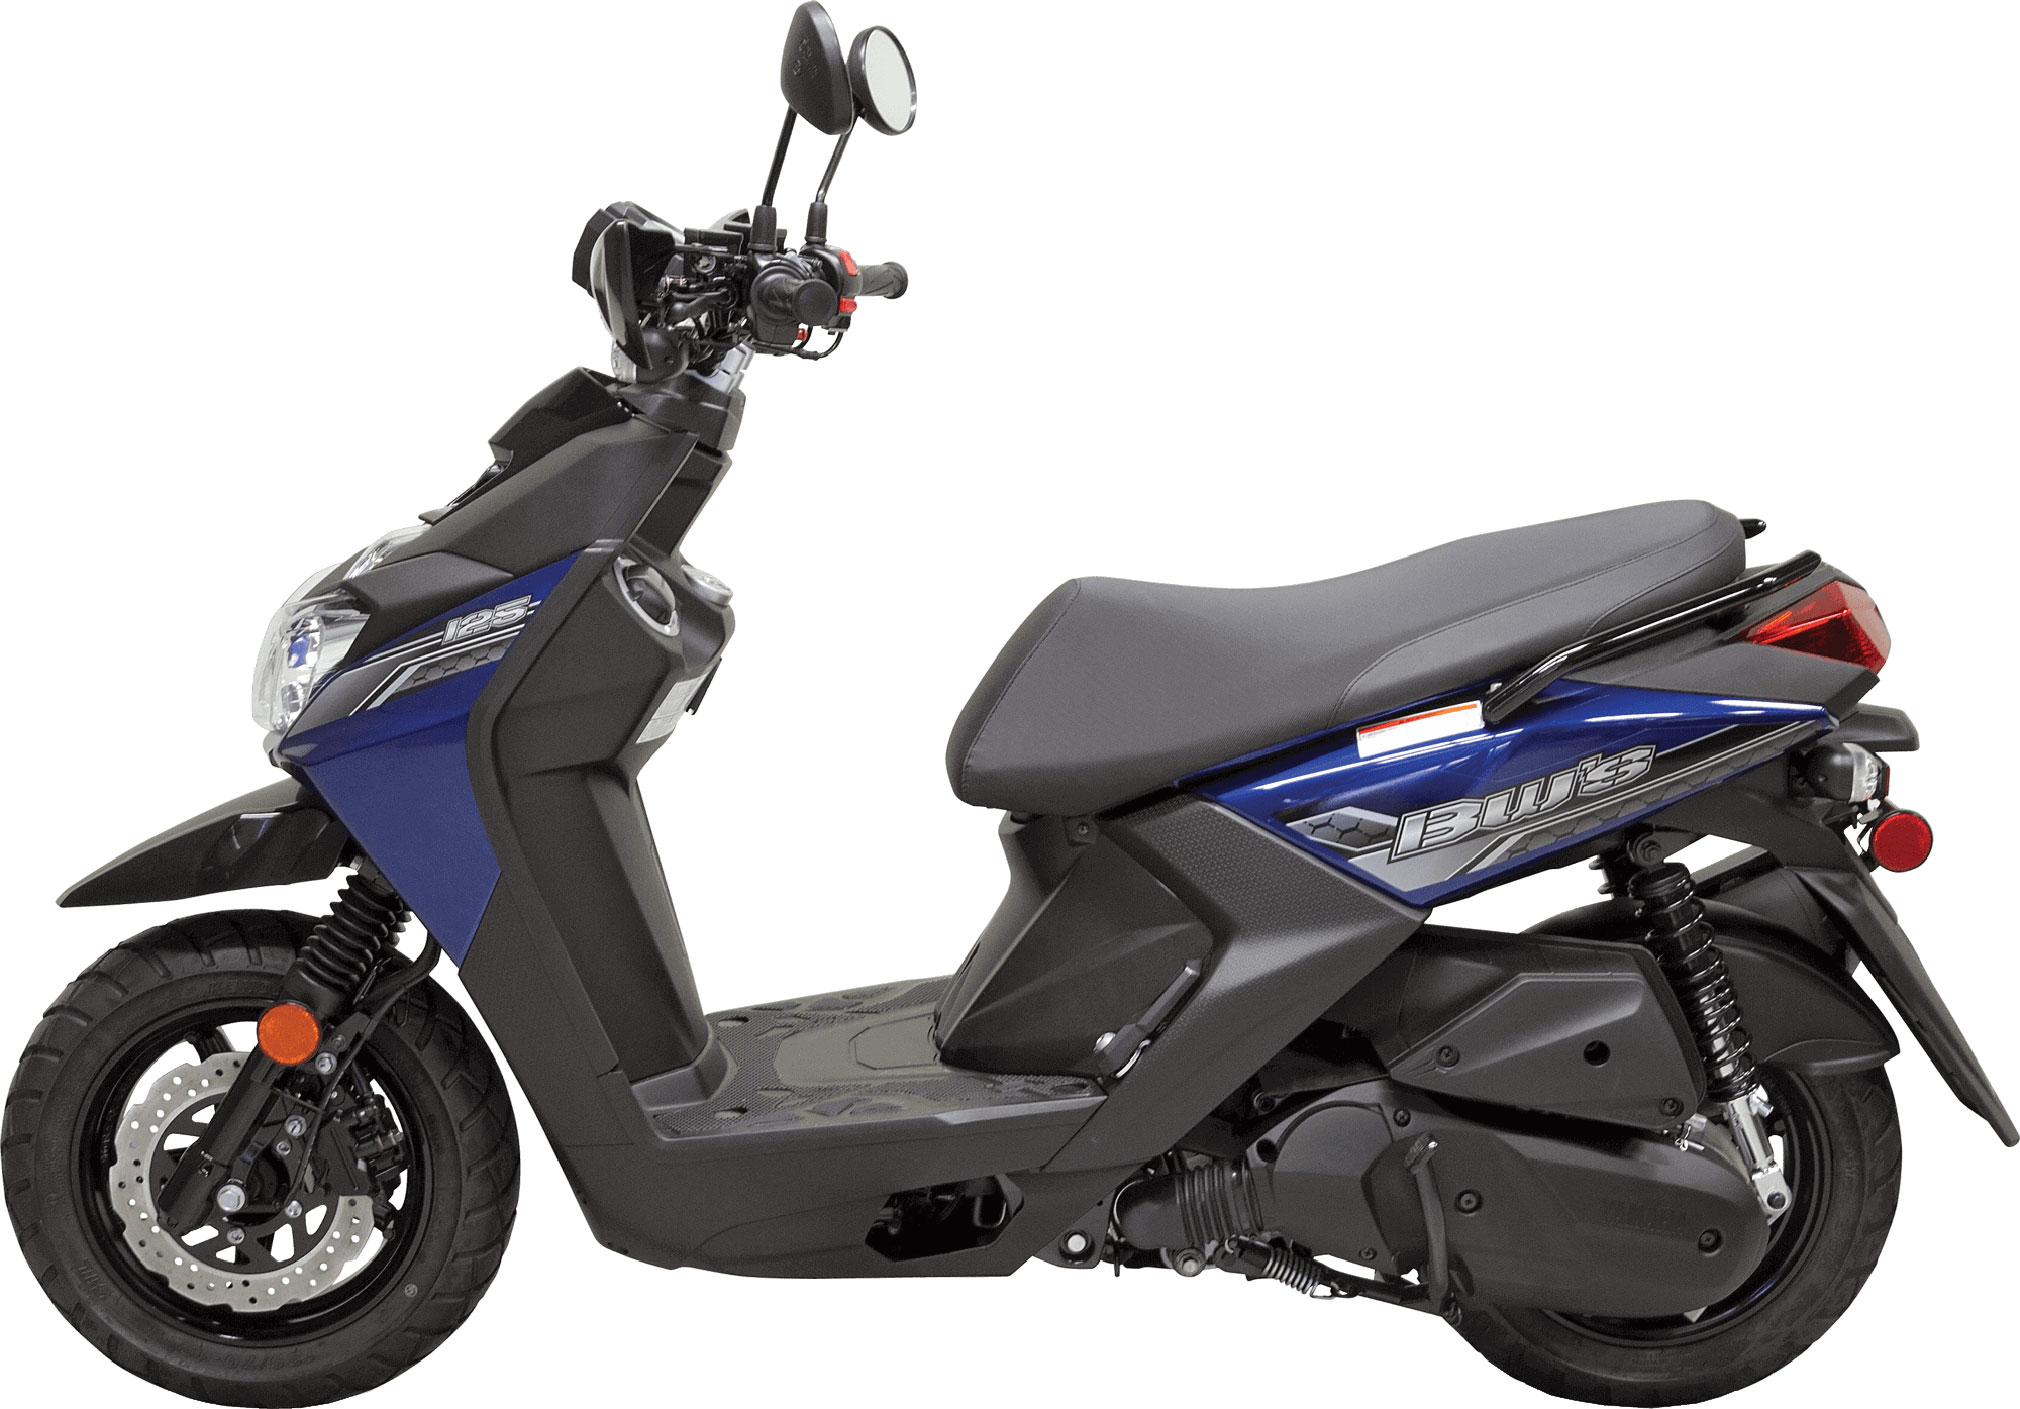 2020 Yamaha BWS 125 Guide • Total Motorcycle